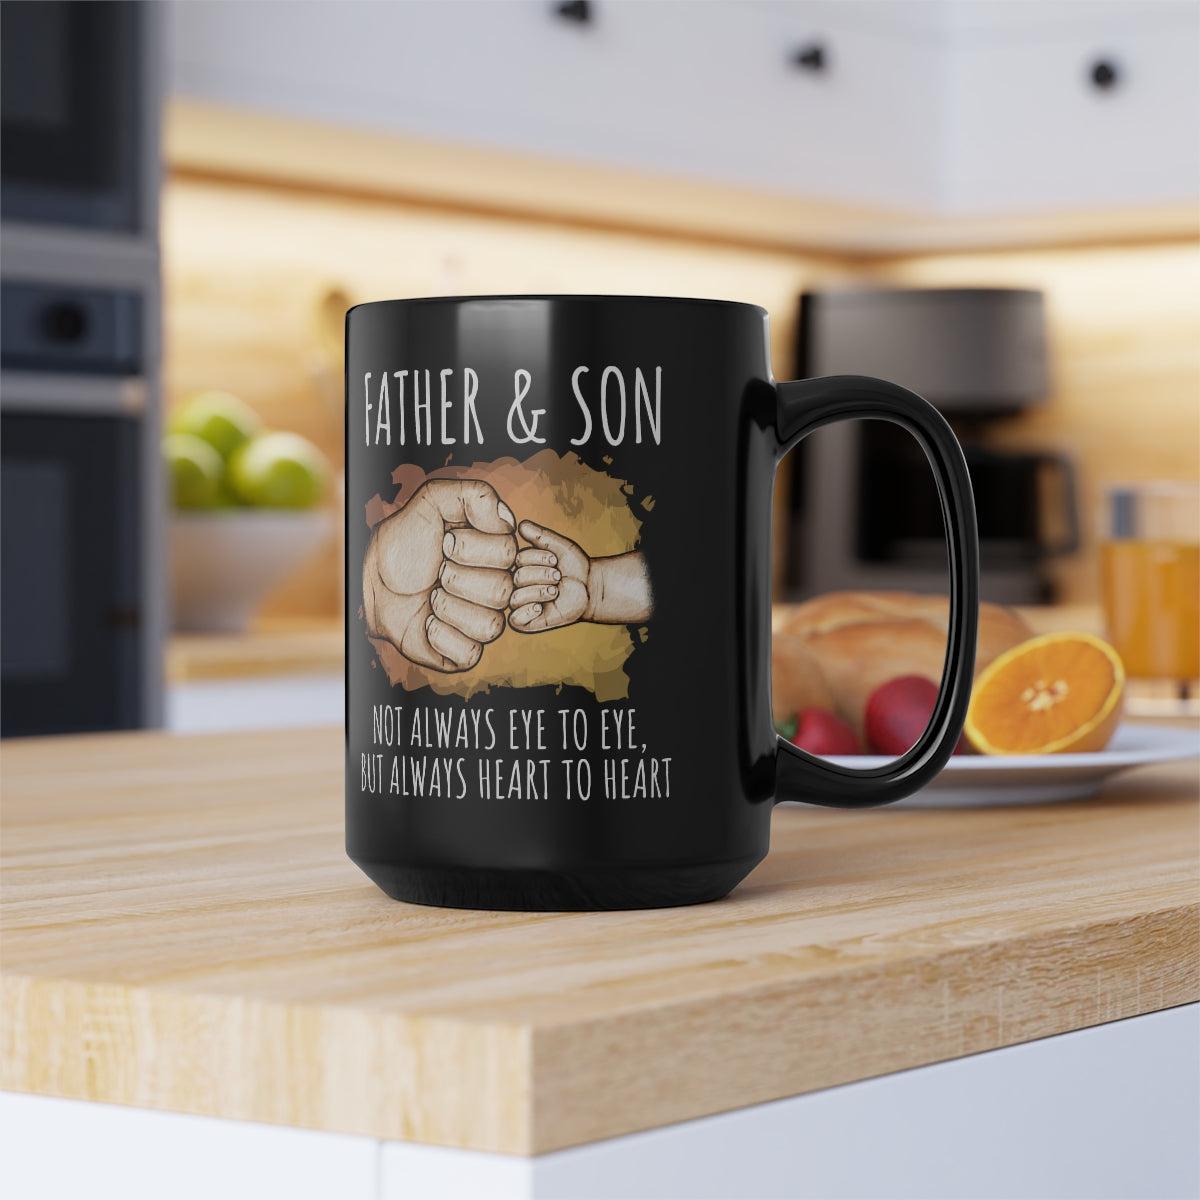 Father & Son Not Always Eye To Eye But Always Heart To Heart 15oz Gift Coffee Mug